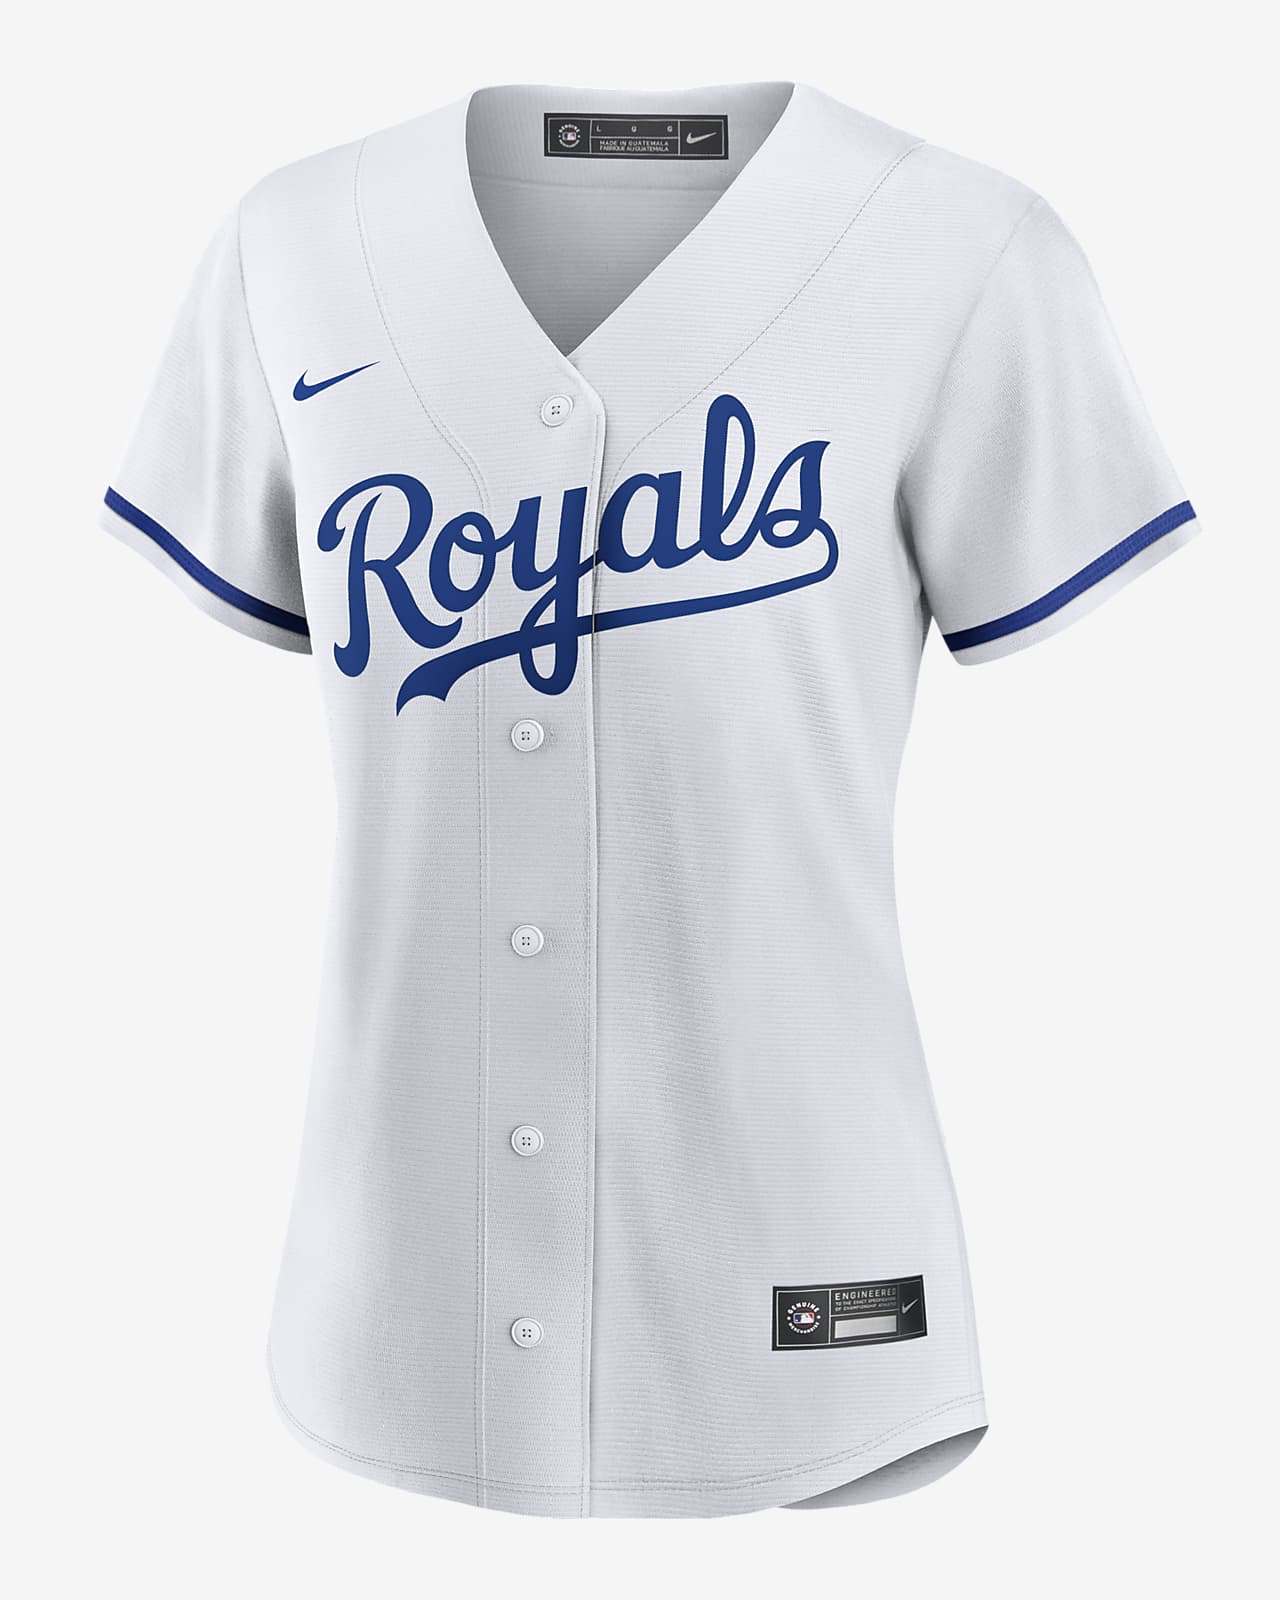 kc royals new jerseys